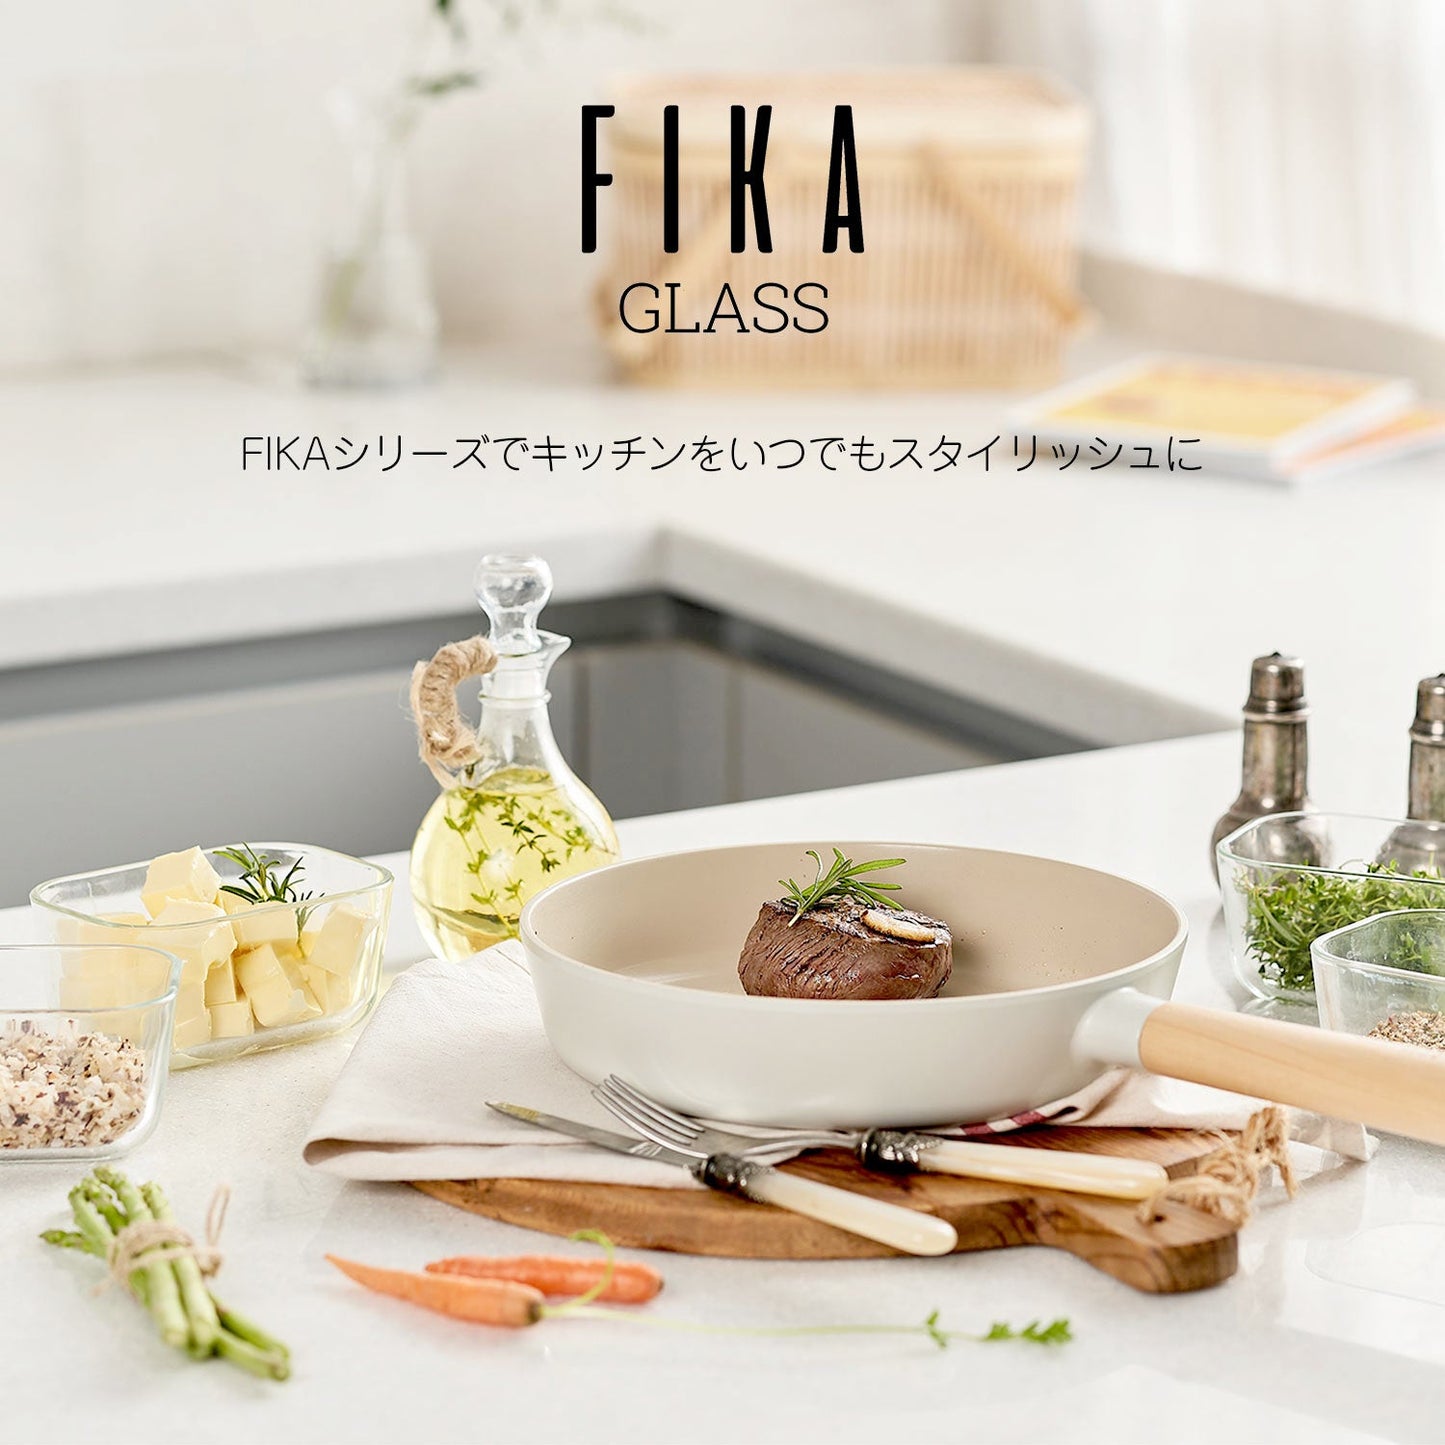 FIKAGLASS耐熱ガラス食品保存用容器 丸型3点セット